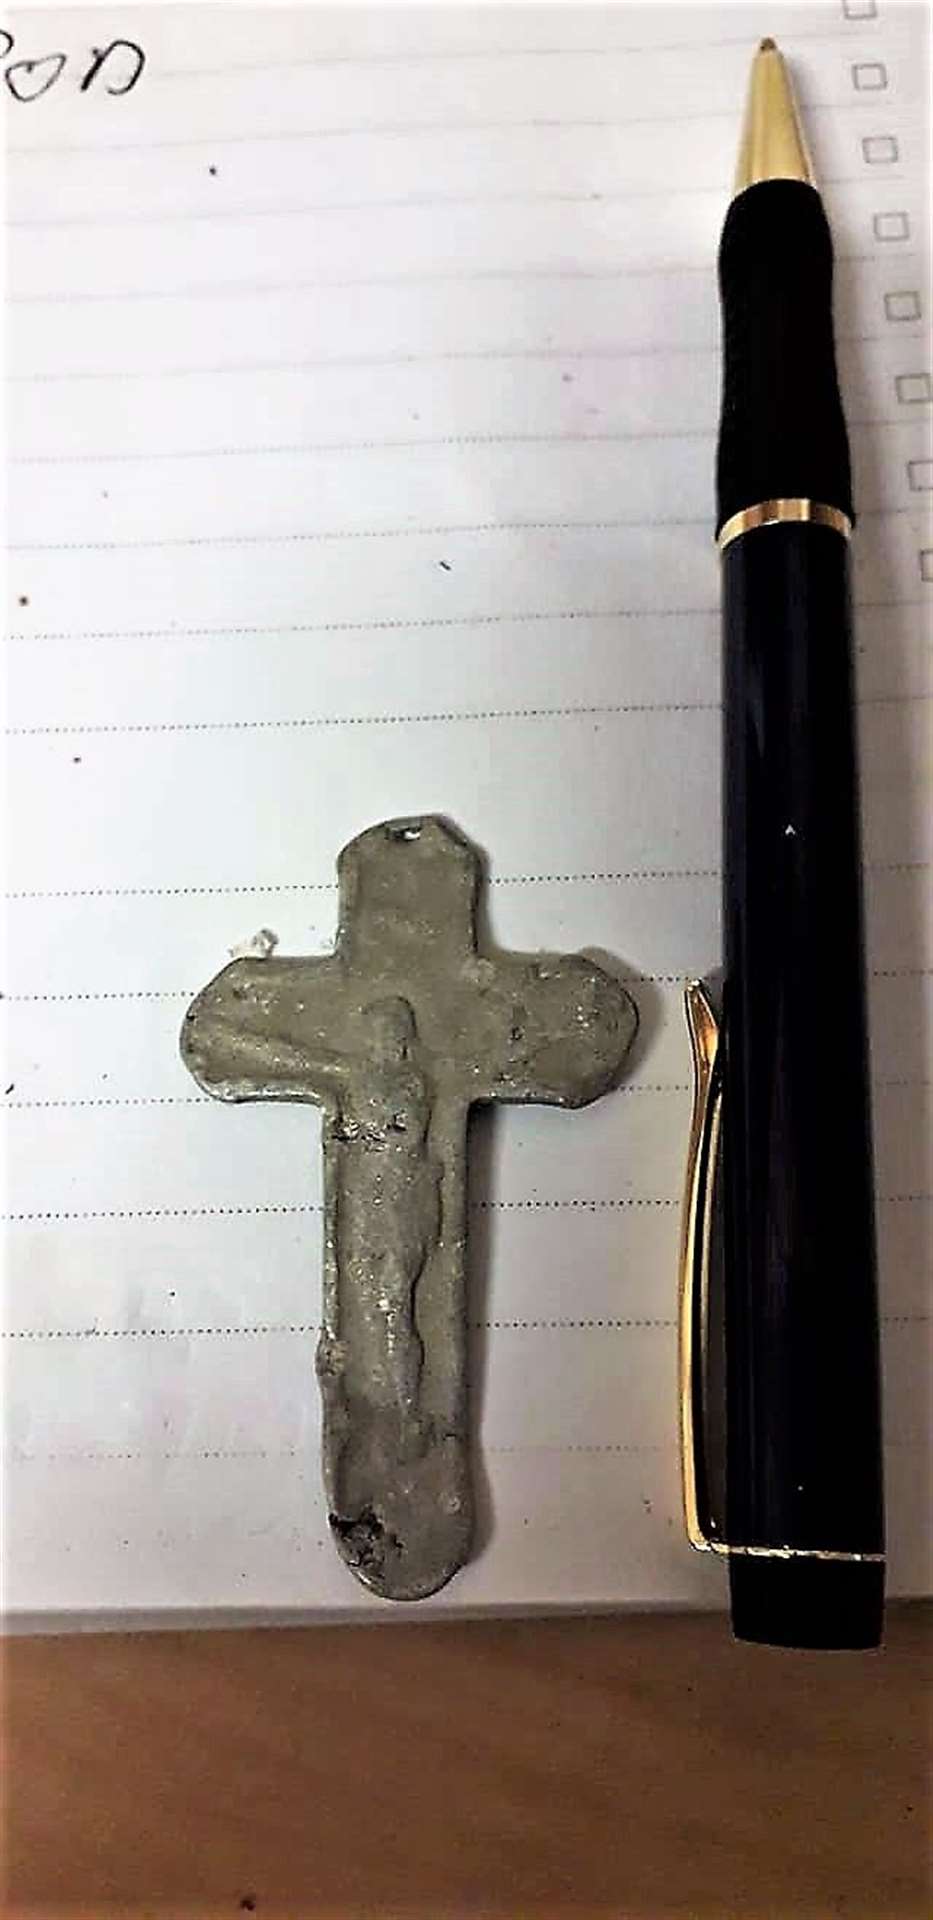 Mike set a pen beside the cross as a size comparison.